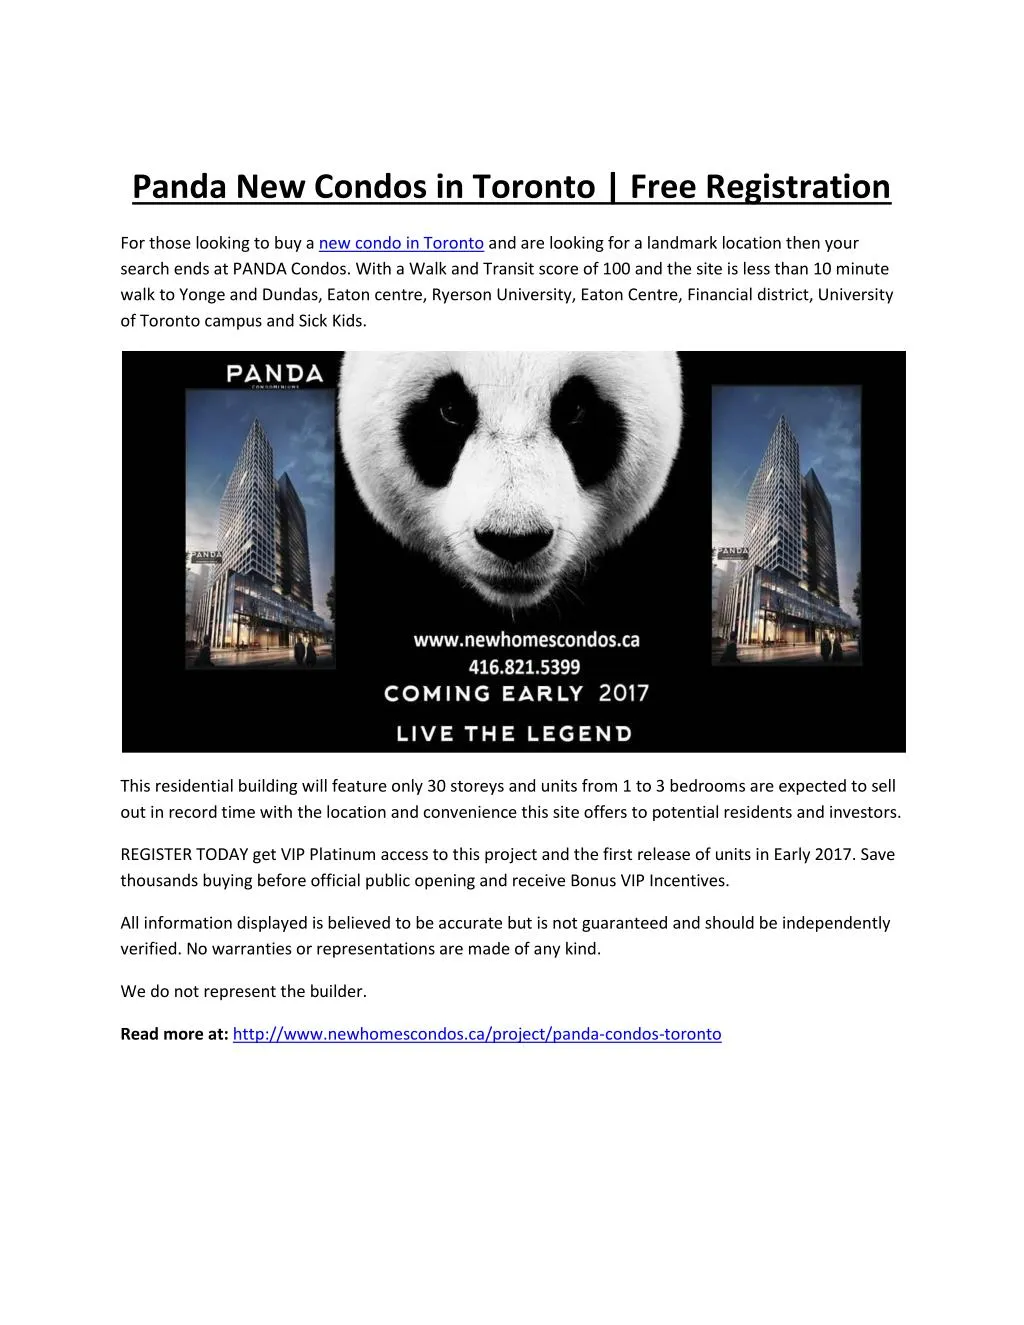 panda new condos in toronto free registration